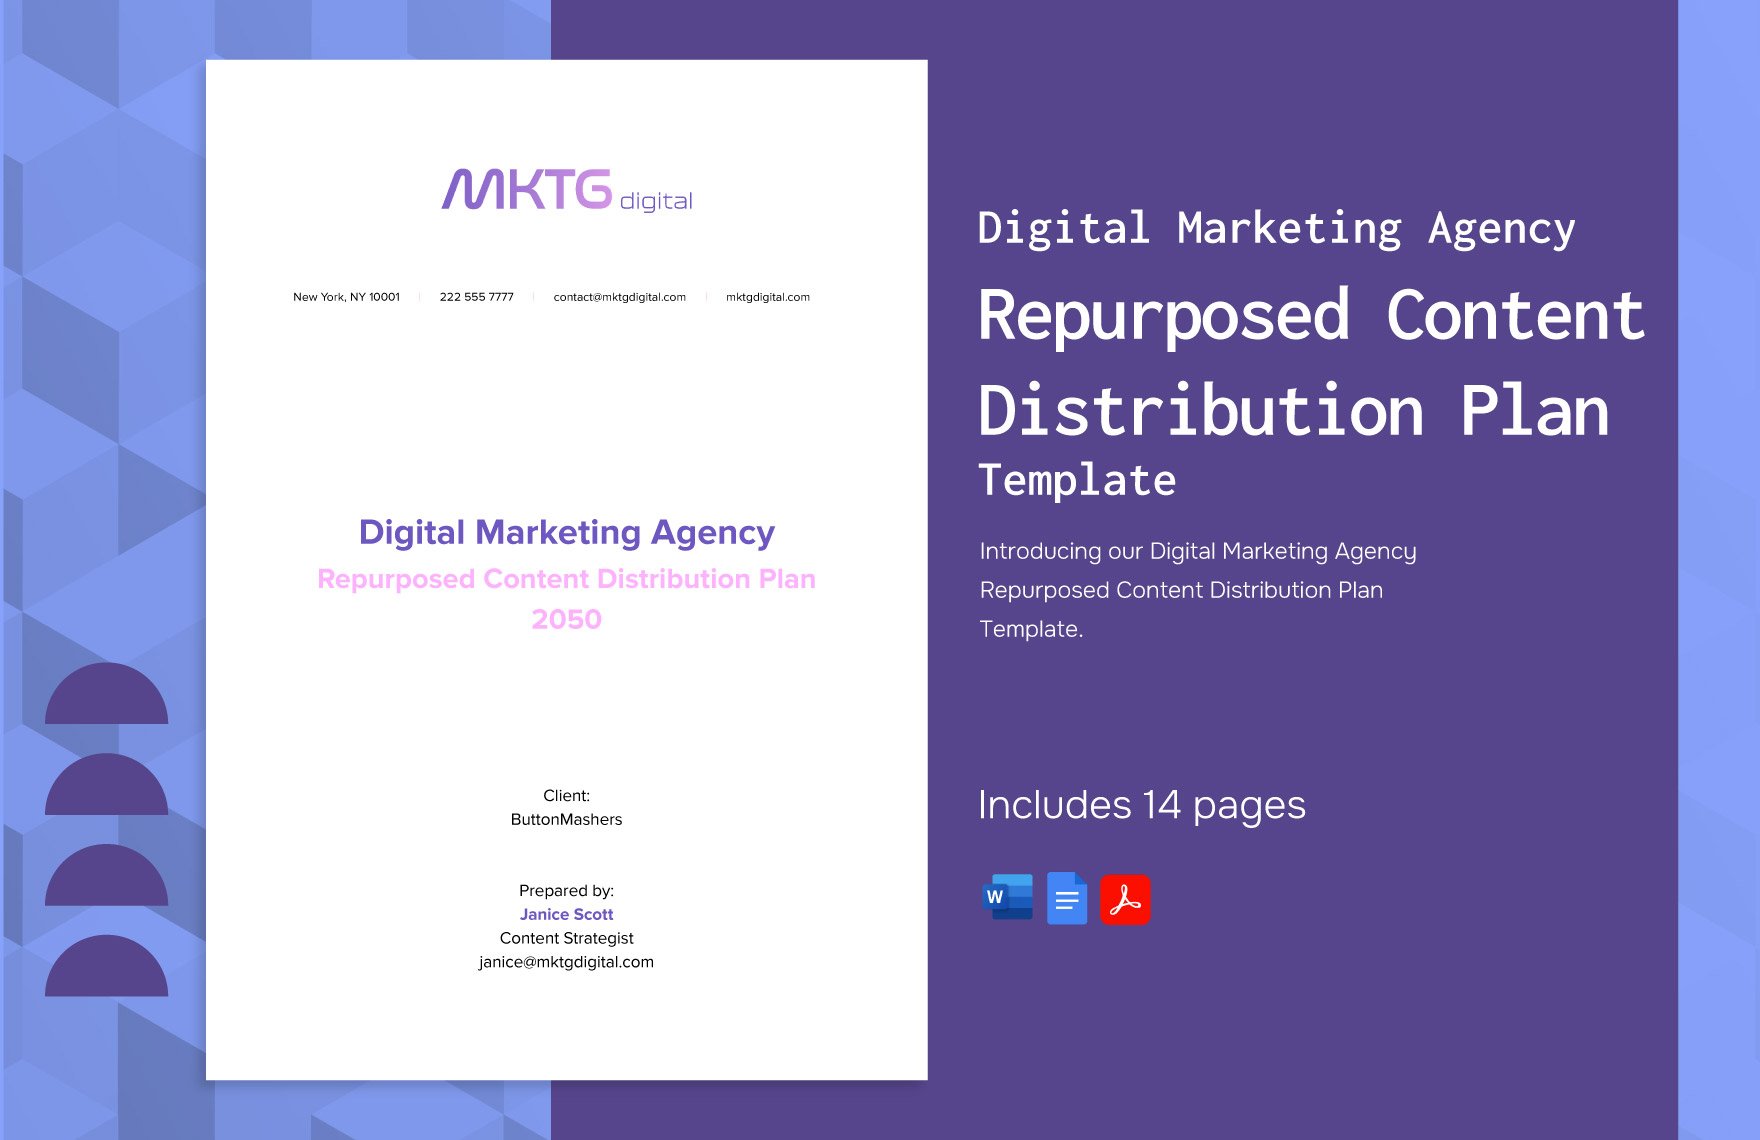 Digital Marketing Agency Repurposed Content Distribution Plan Template